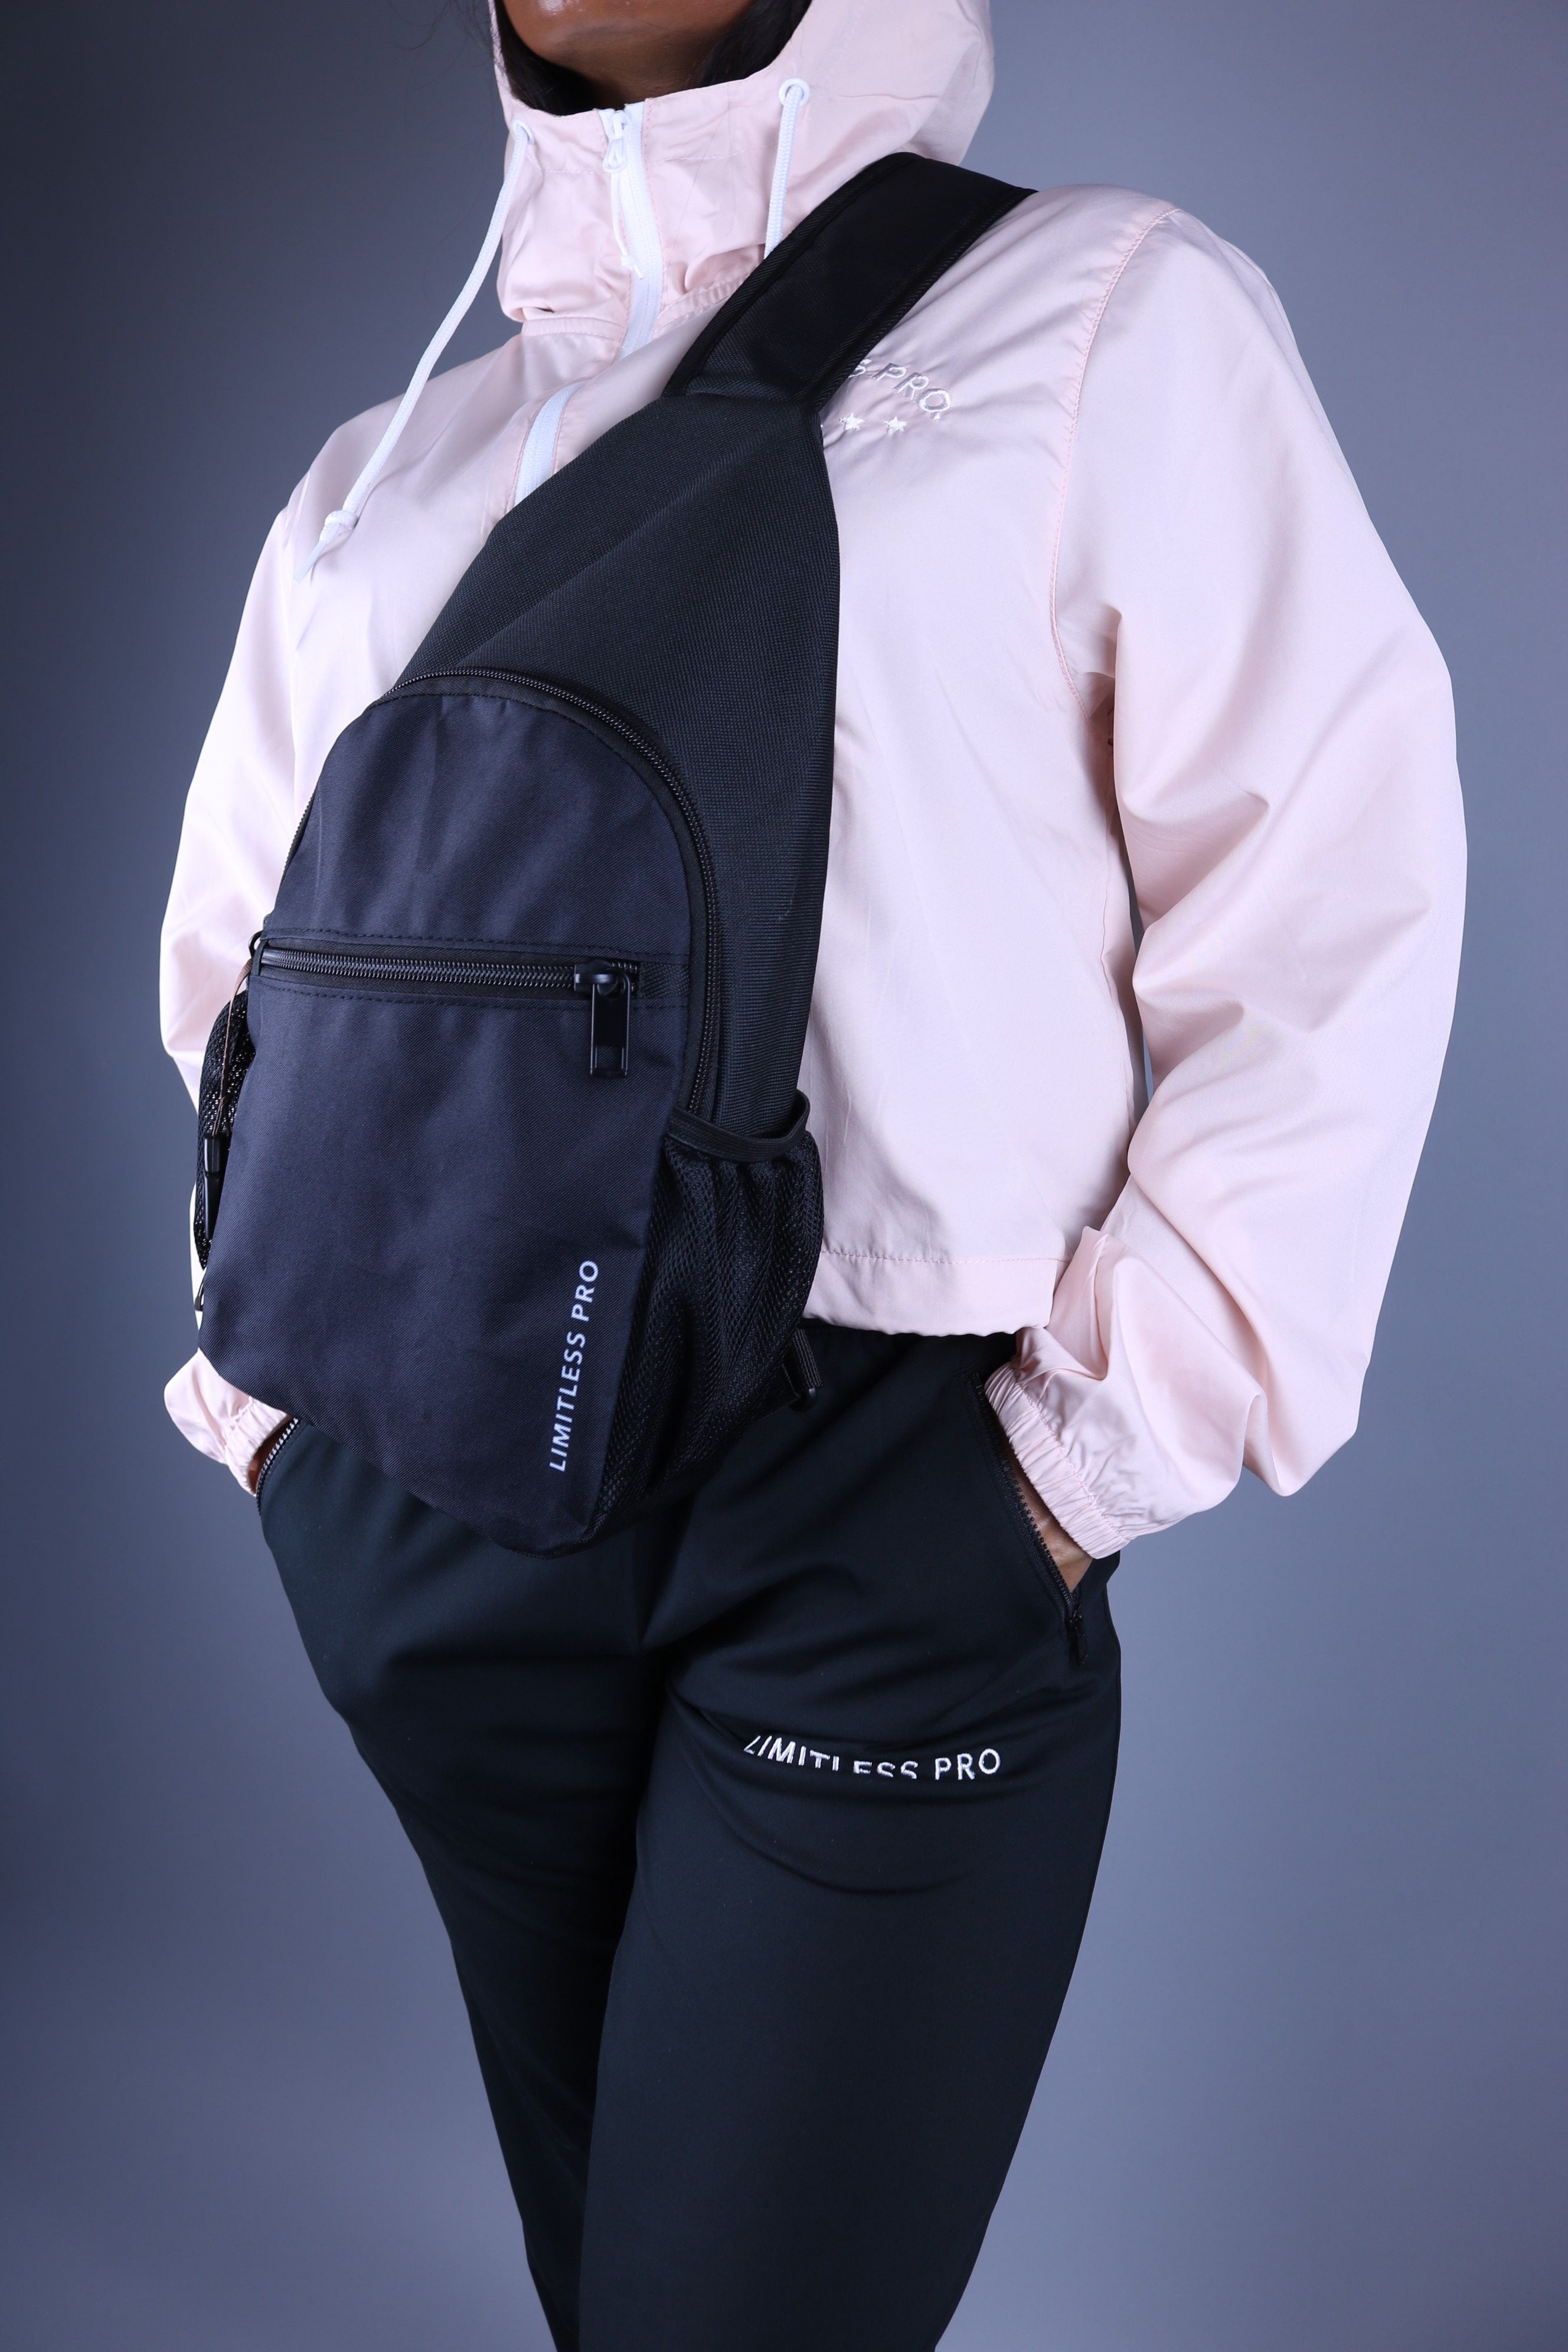 Elegante & CO - Limitless Pro Sports Chest Bag (Black)